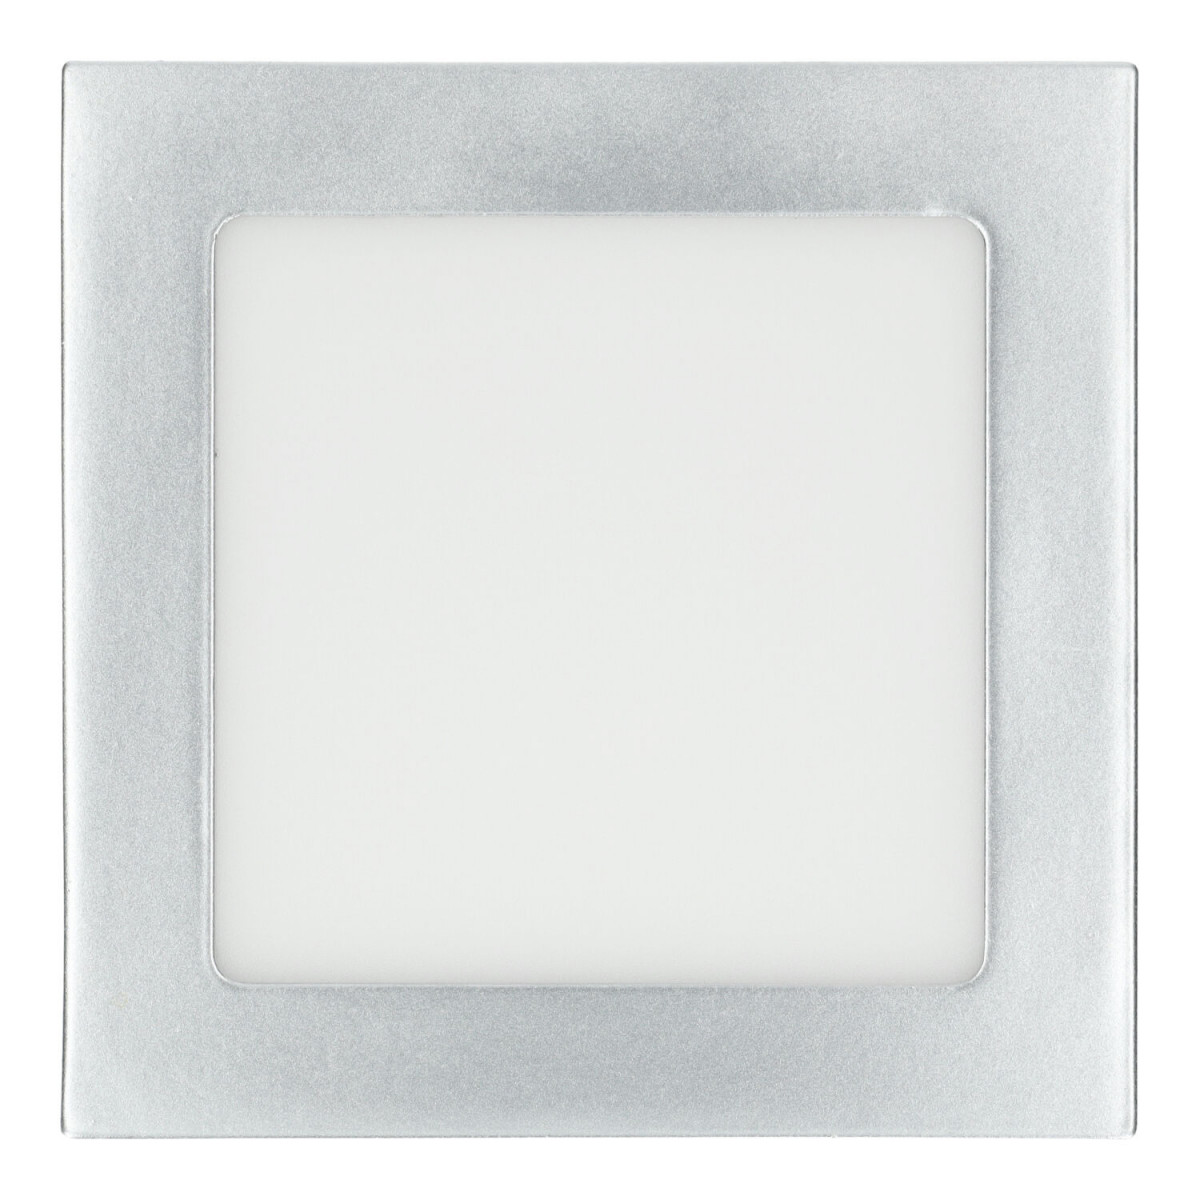 Downlight Panel 12W Silber Quadrat